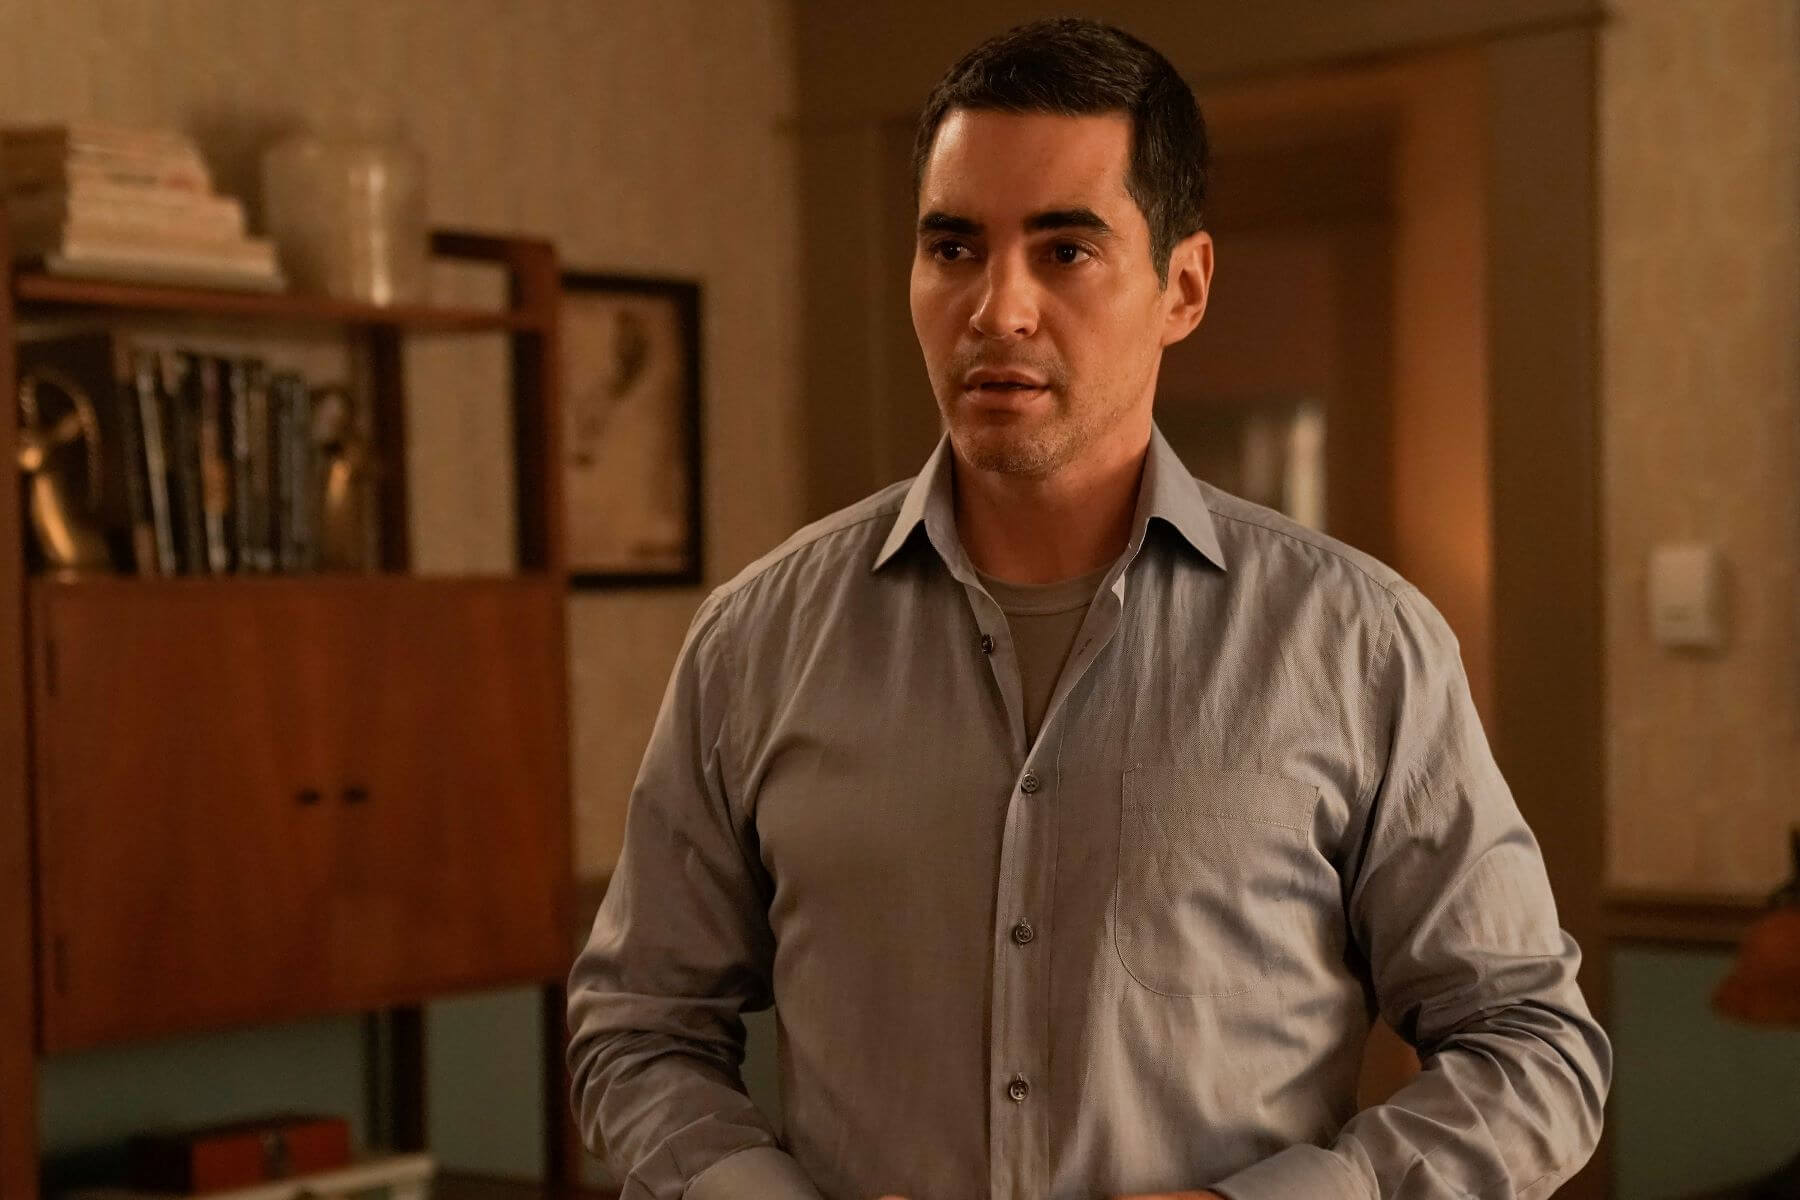 Ramón Rodríguez, in character as Will Trent in 'Will Trent' Season 1 Episode 7, wears a light blue button-up shirt over a gray shirt.